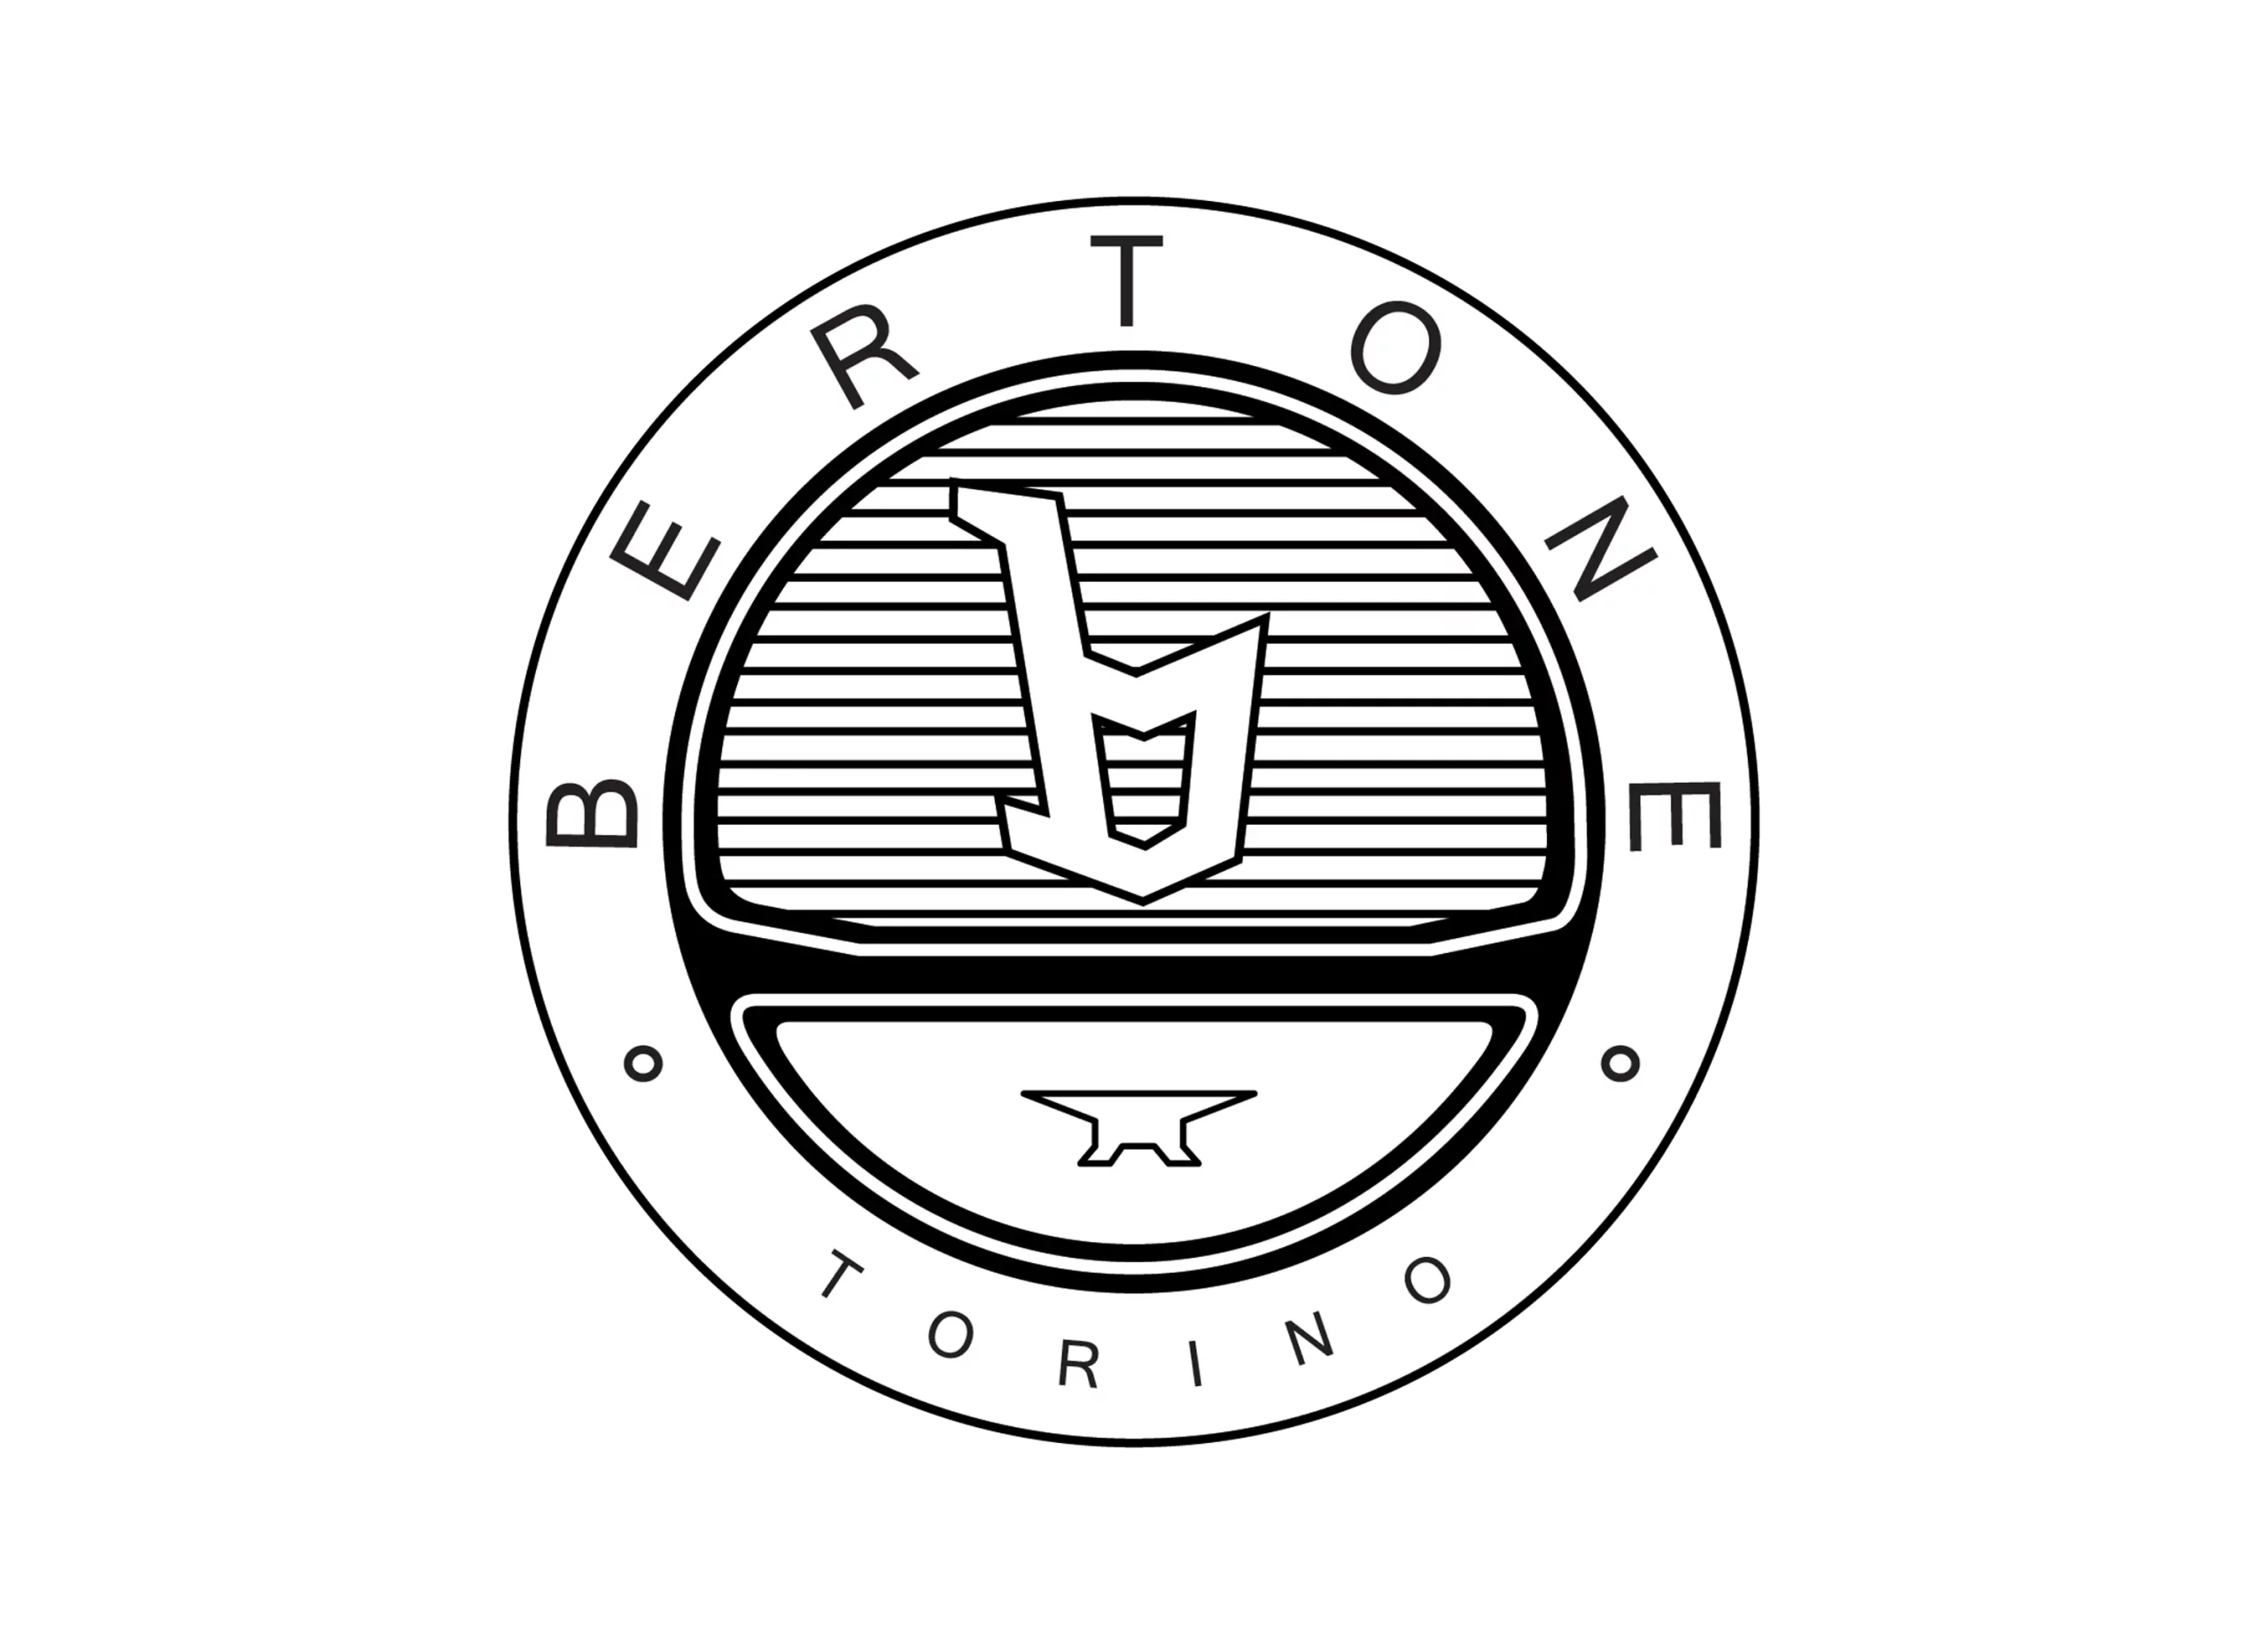 Bertone logo